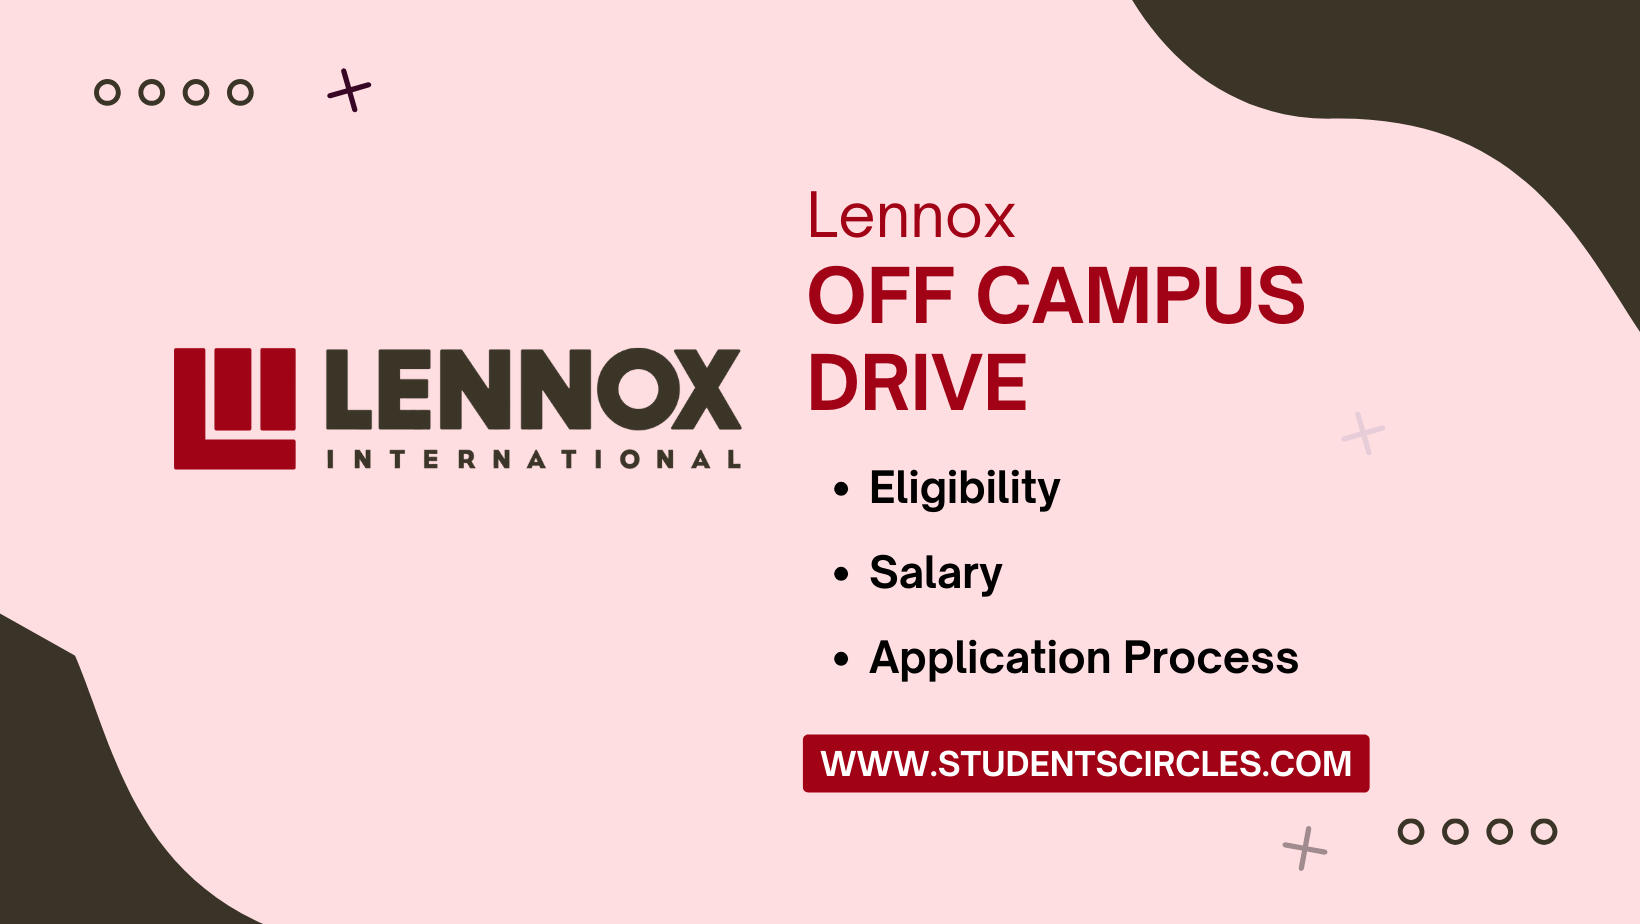 Lennox Off Campus Drive